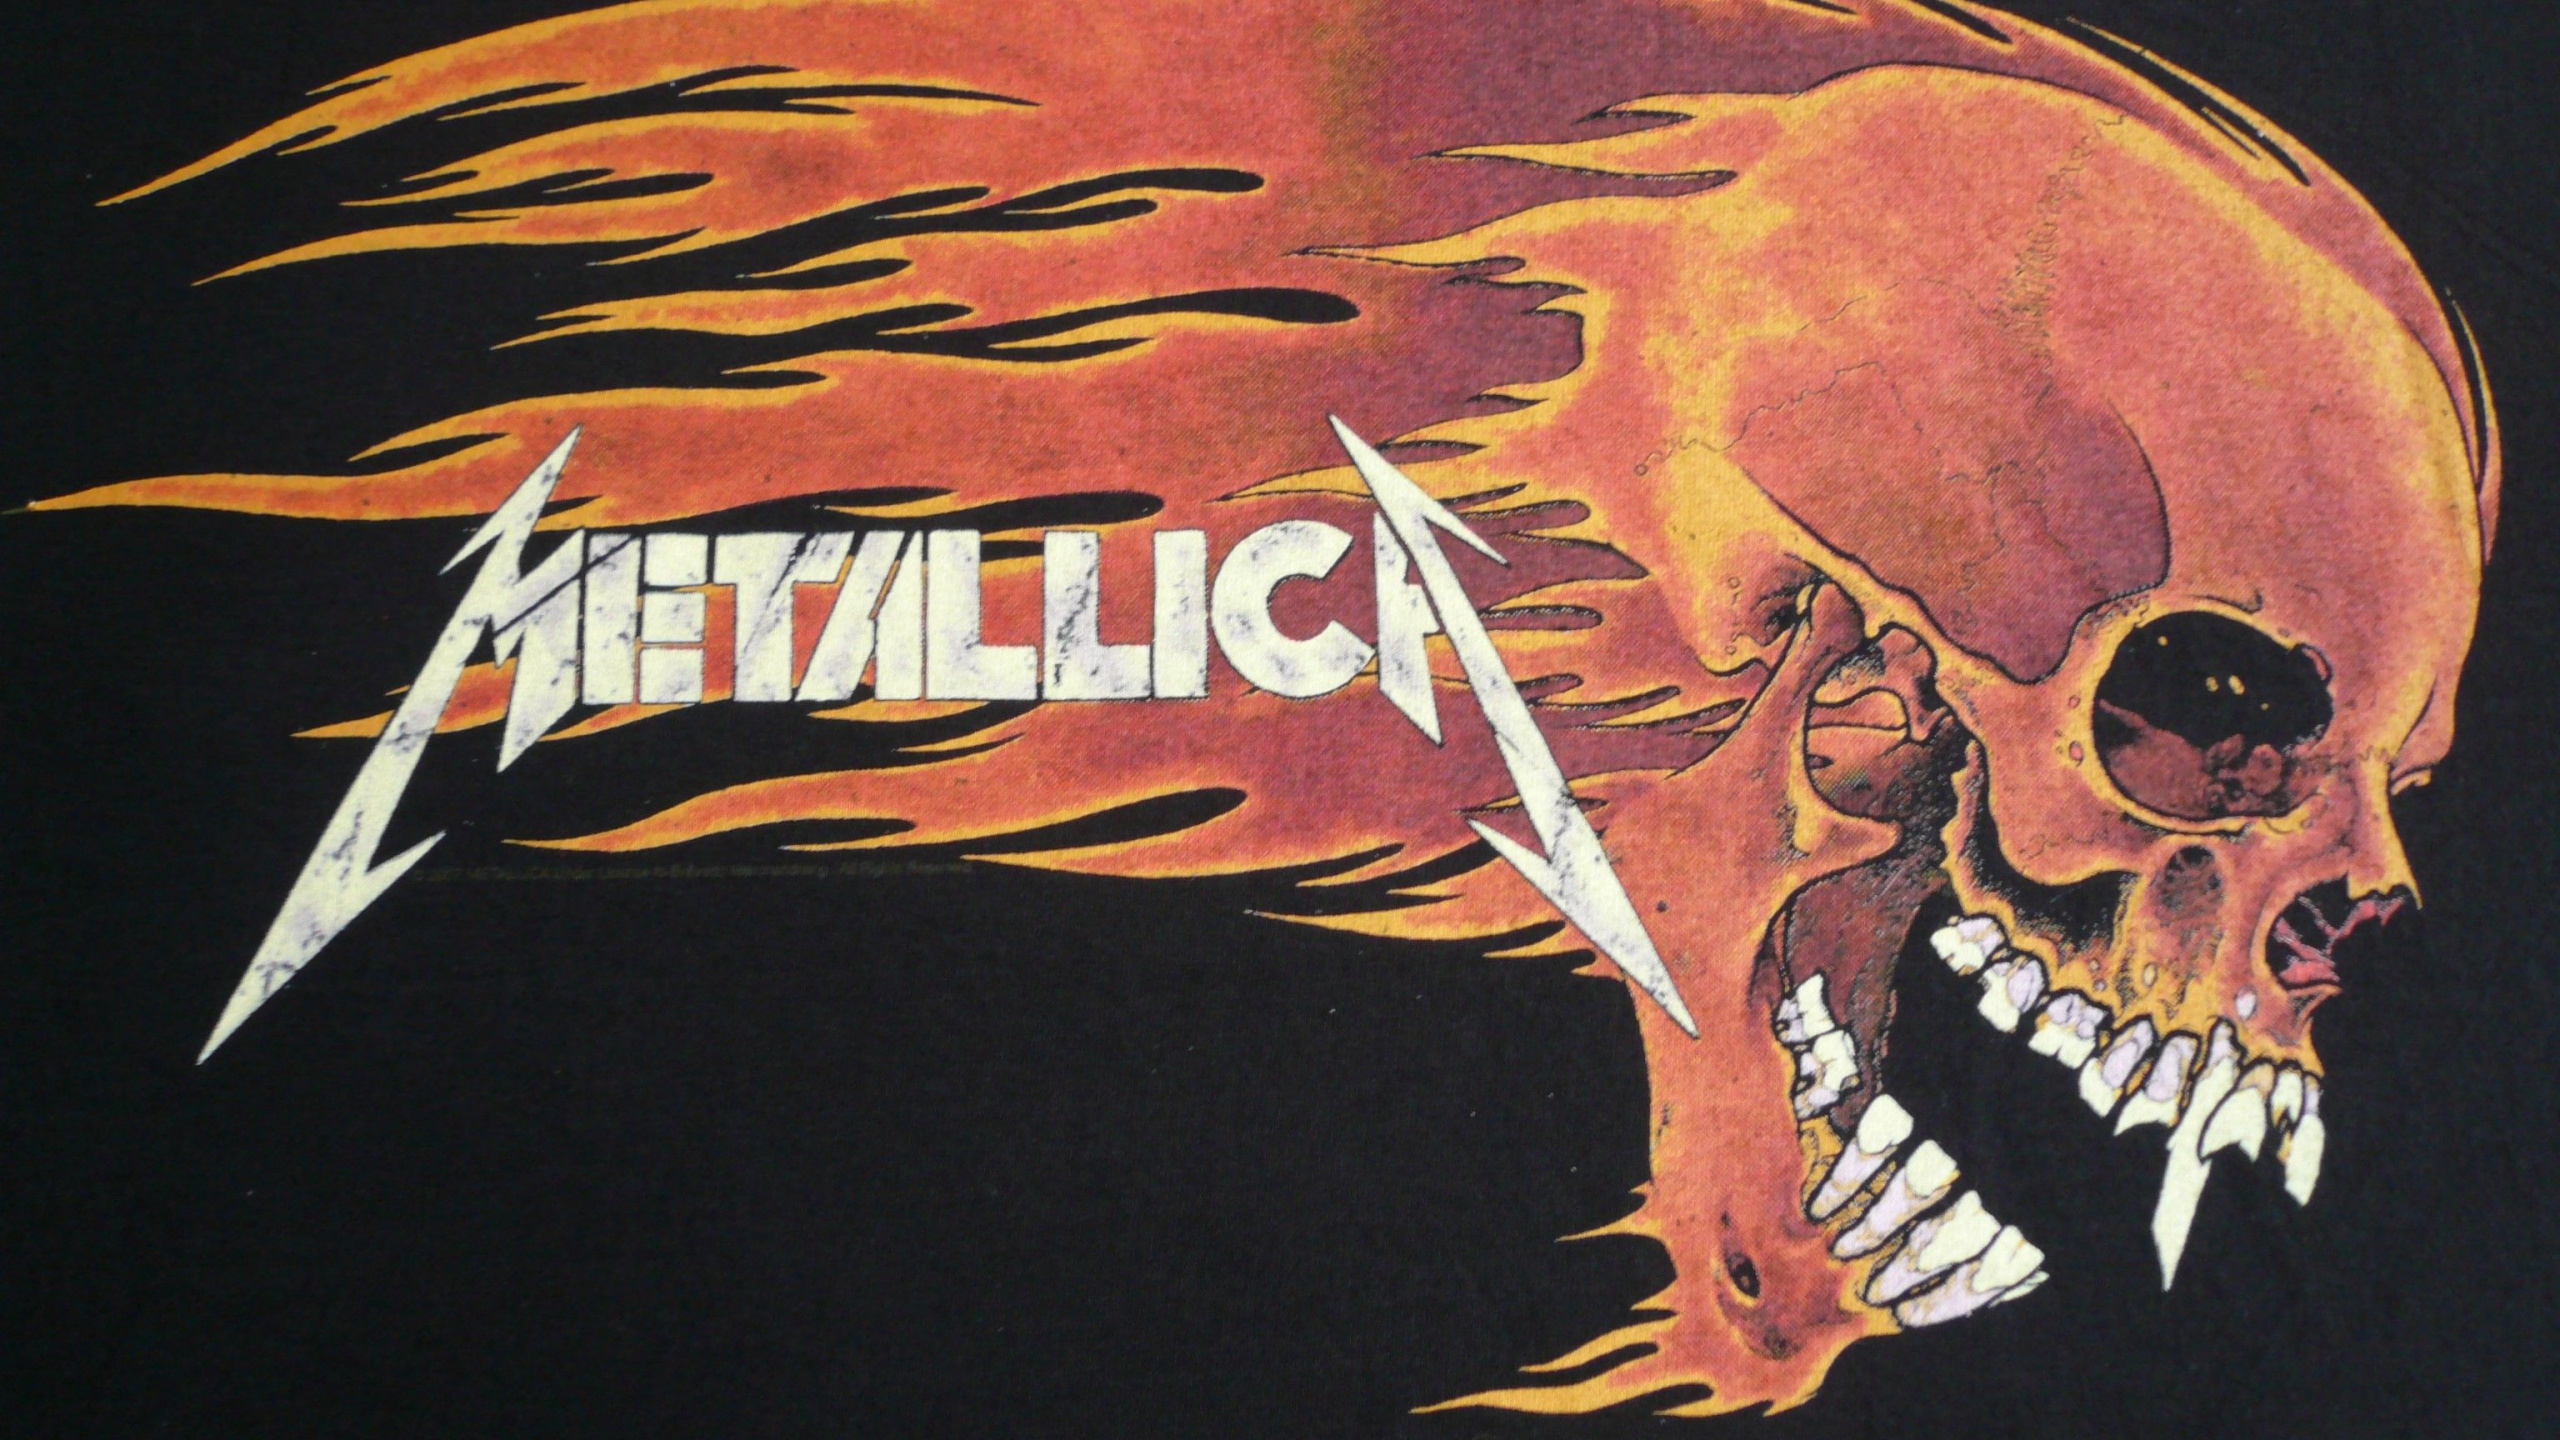 Metallica, Camisa, Heavy Metal, Cráneo, Hueso. Wallpaper in 2560x1440 Resolution